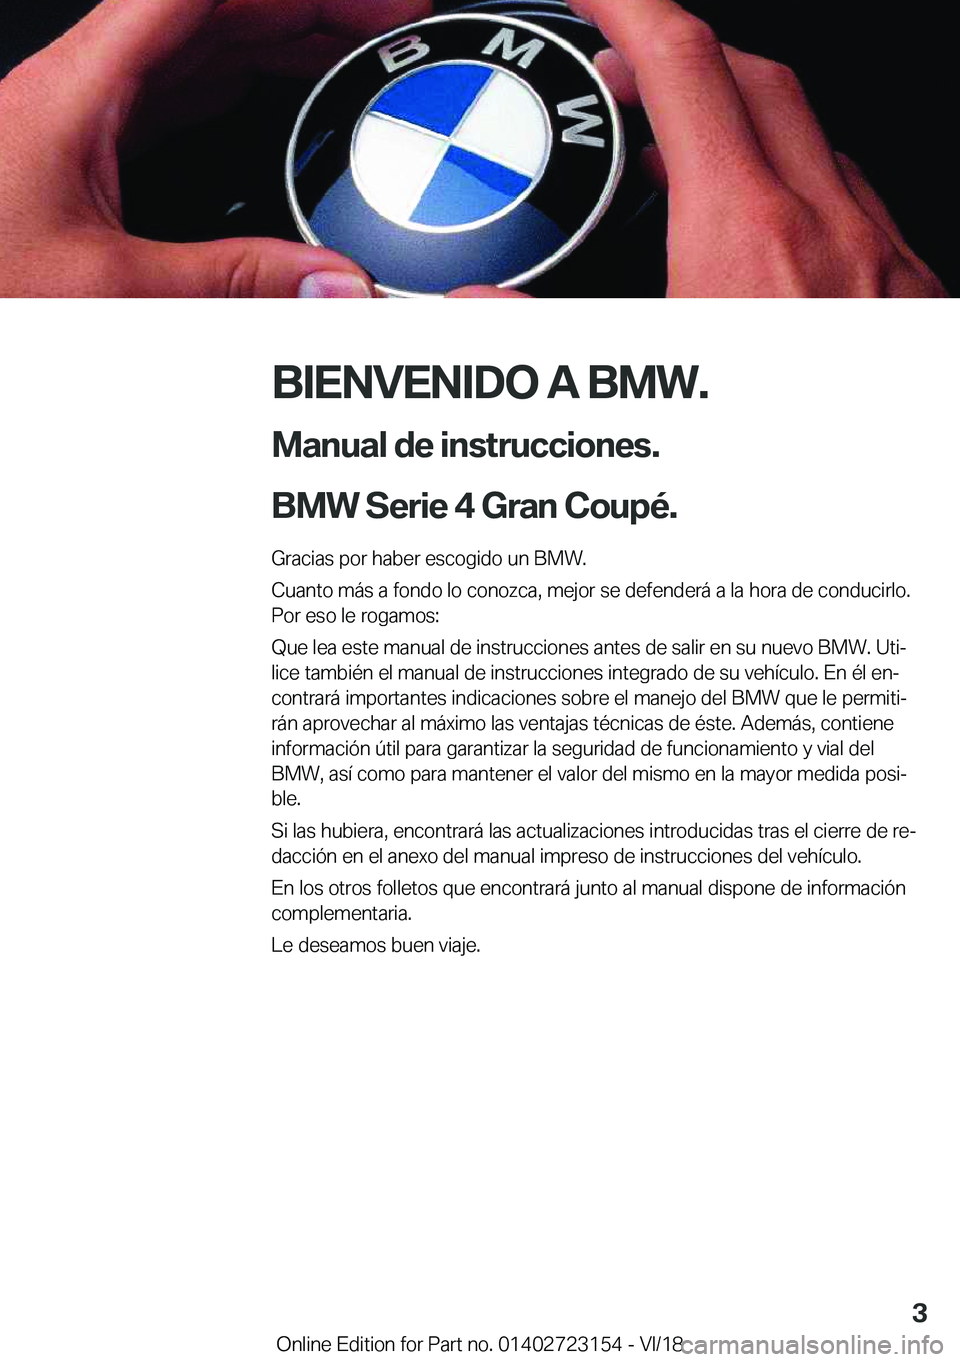 BMW 4 SERIES COUPE 2019  Manuales de Empleo (in Spanish) �B�I�E�N�V�E�N�I�D�O��A��B�M�W�.
�M�a�n�u�a�l��d�e��i�n�s�t�r�u�c�c�i�o�n�e�s�.
�B�M�W��S�e�r�i�e��4��G�r�a�n��C�o�u�p�